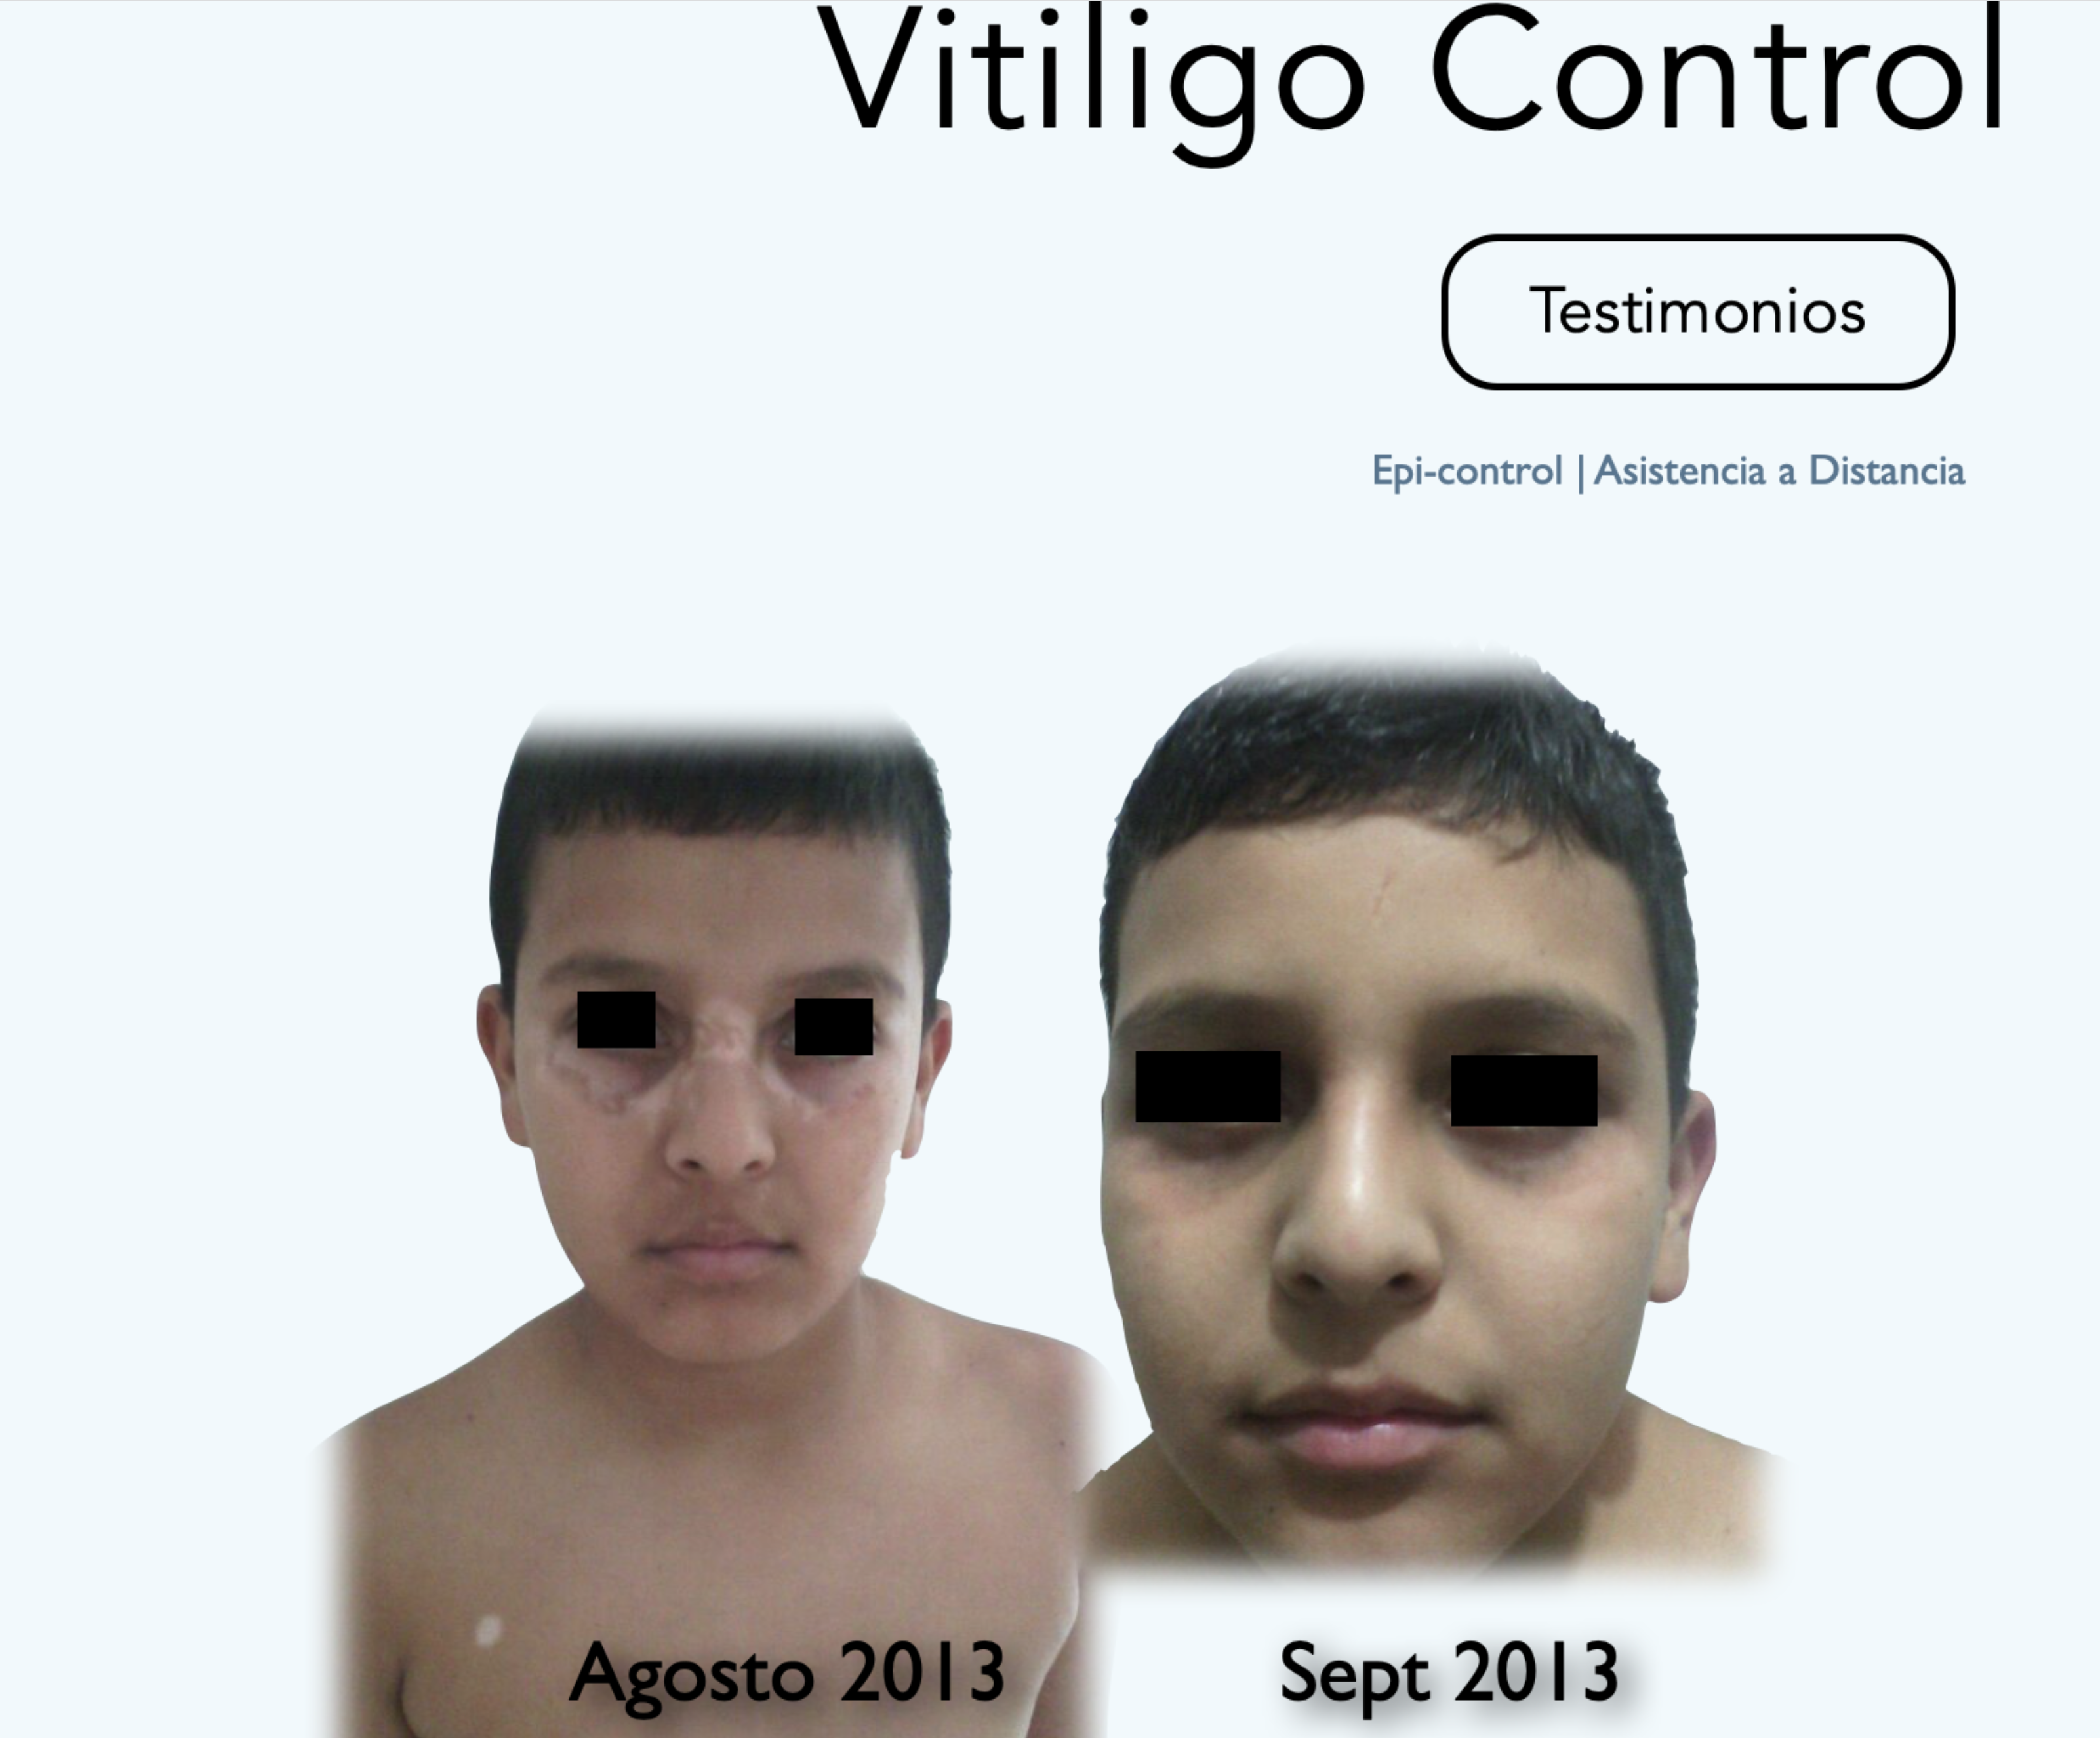 testimonios_libro_evitando_y_controlando_vitiligo_11.png